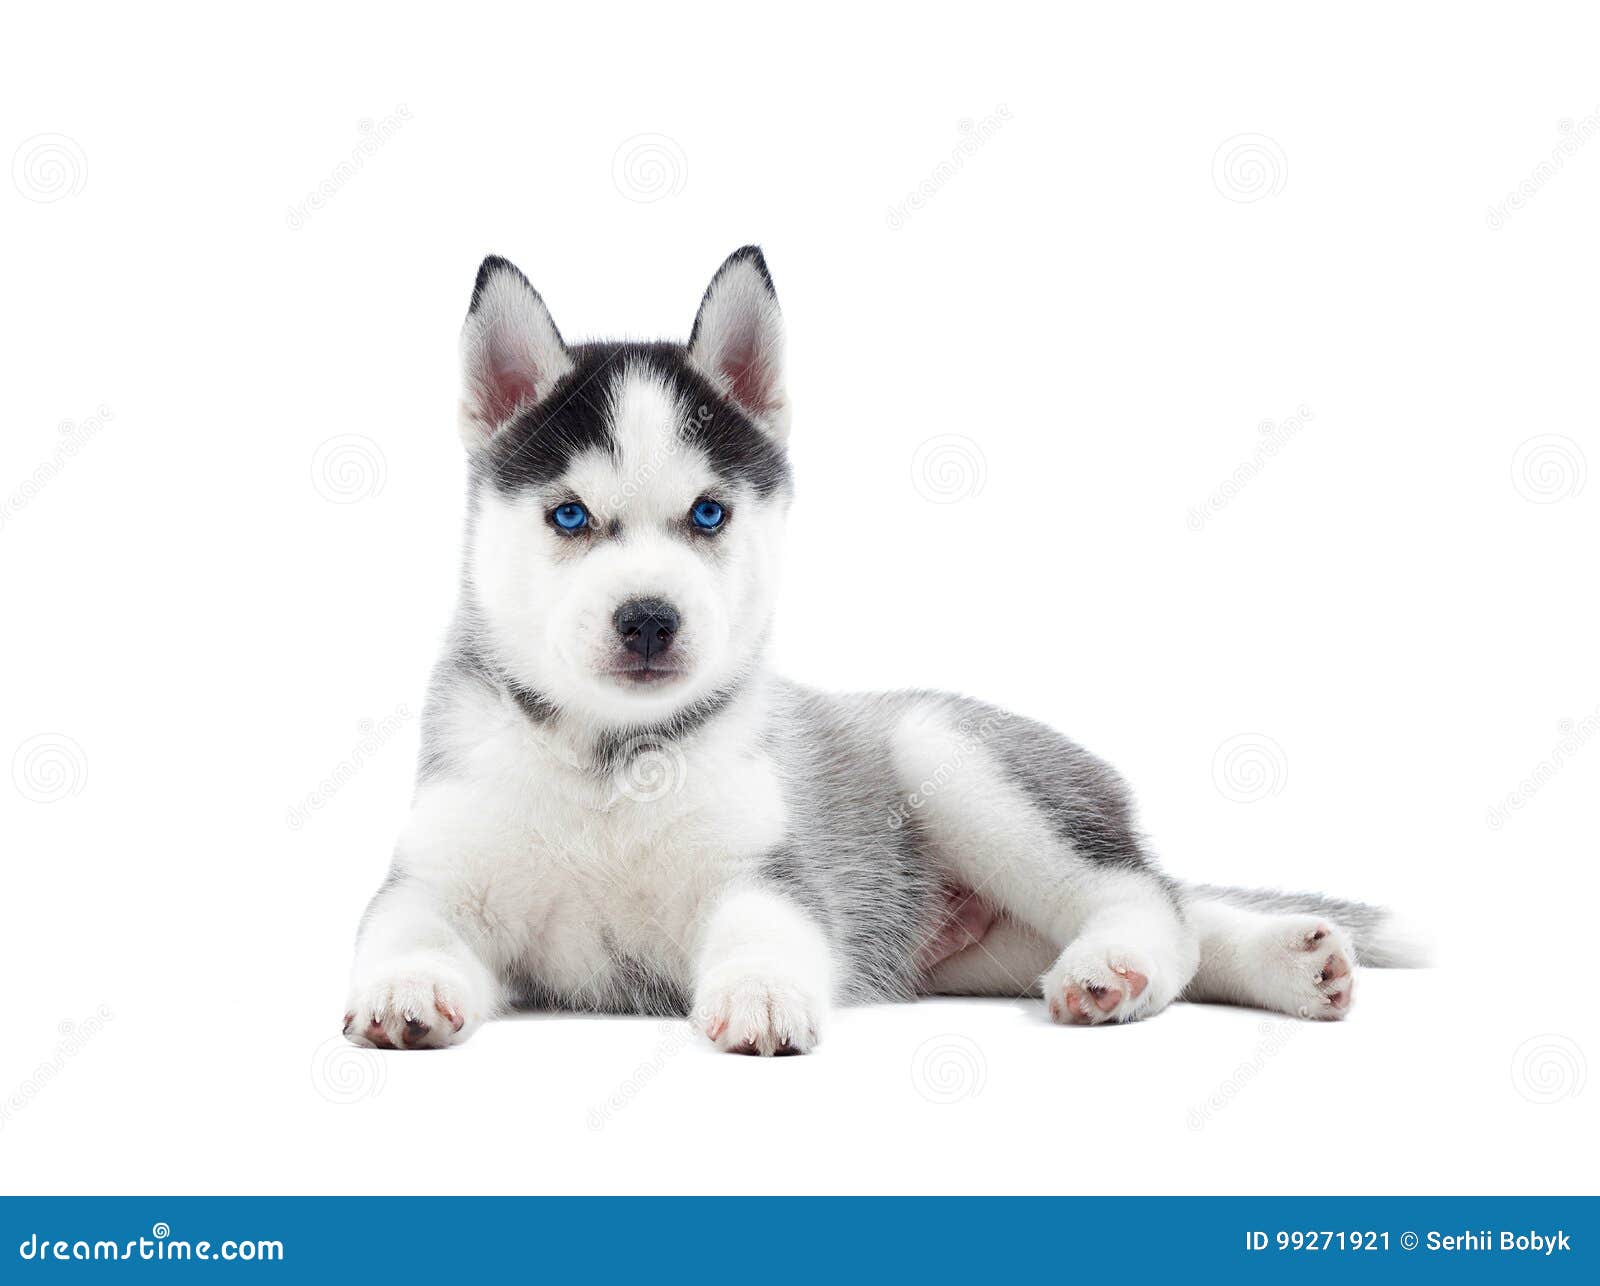 Puppy Of Siberian Husky Dog With Birth Blue Eyes. Stock Image Image